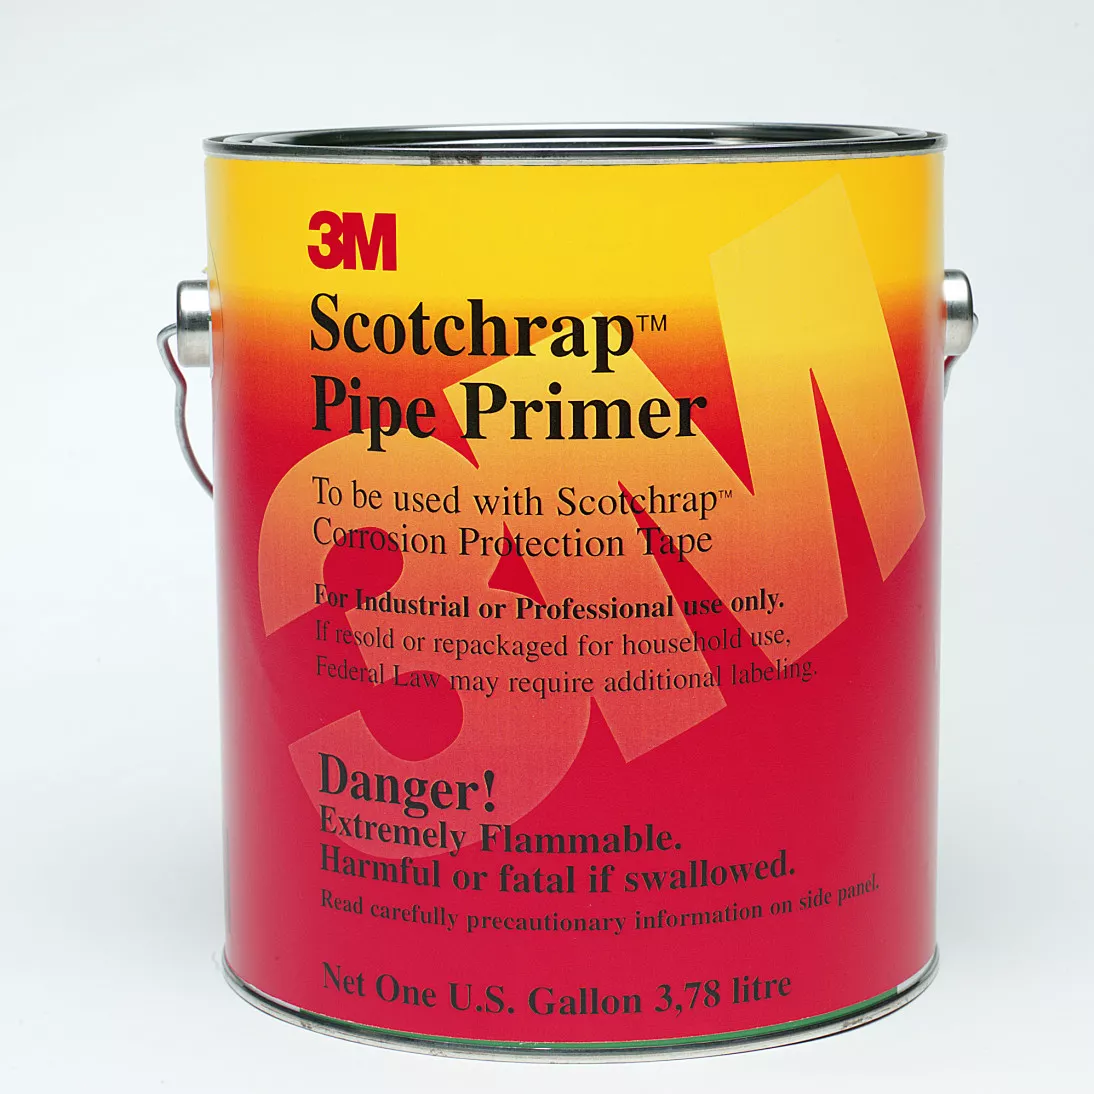 3M™ Scotchrap™ Pipe Primer, 1 gallon can, 1 gallon/container, 4
gallons/case